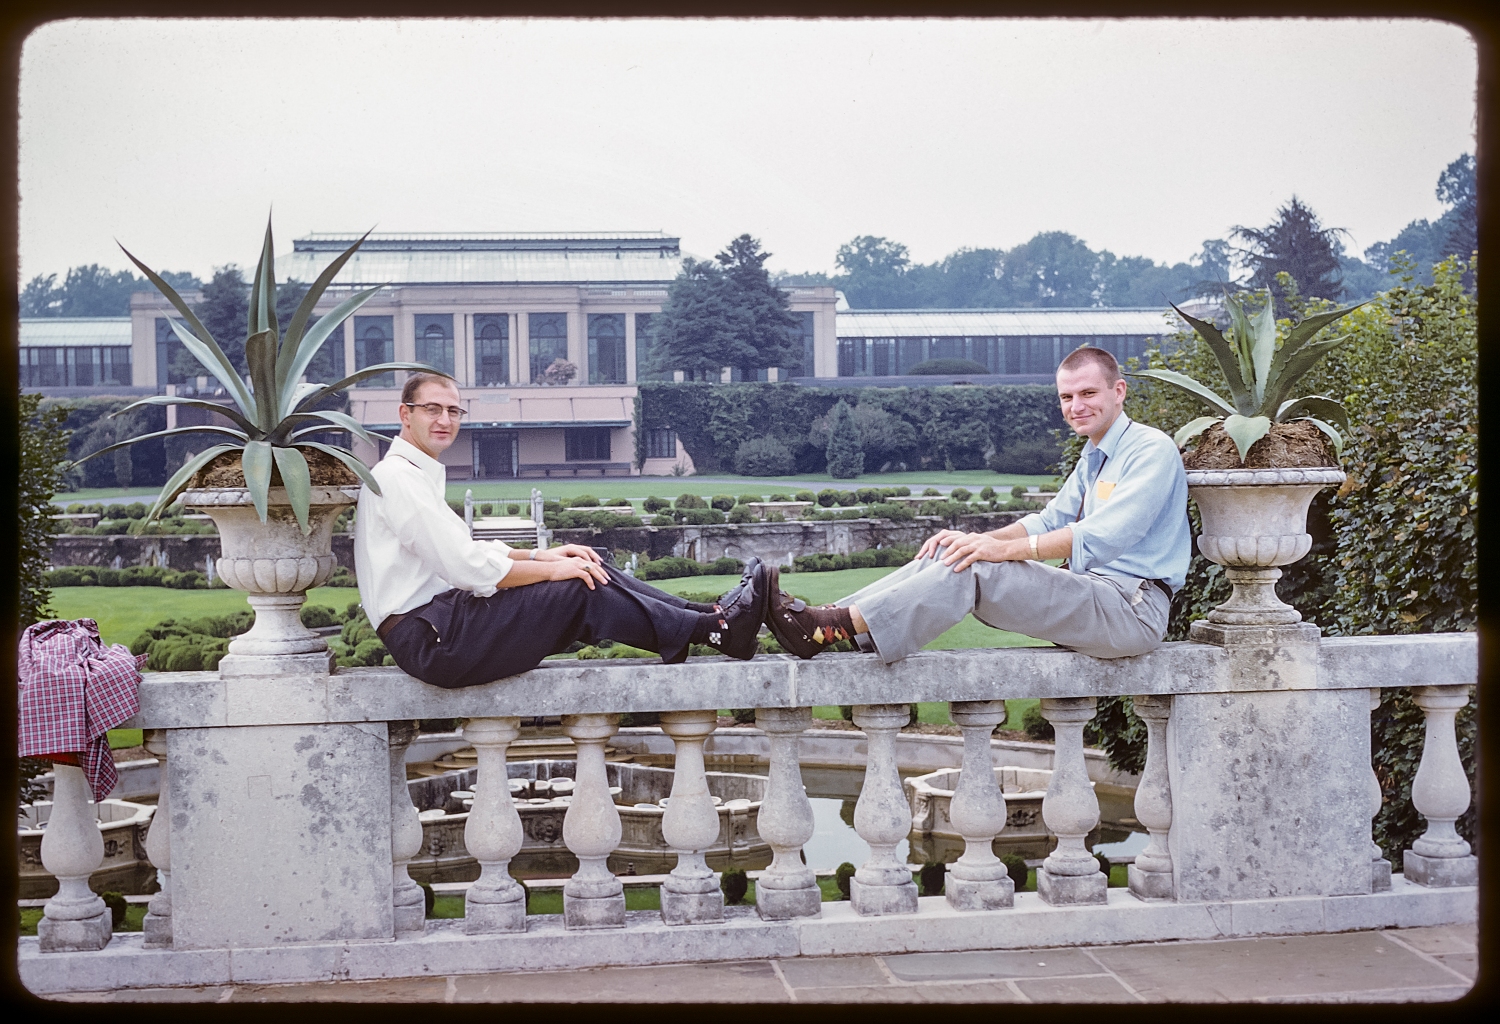 Joe S. and Bob at Longwood Gardens